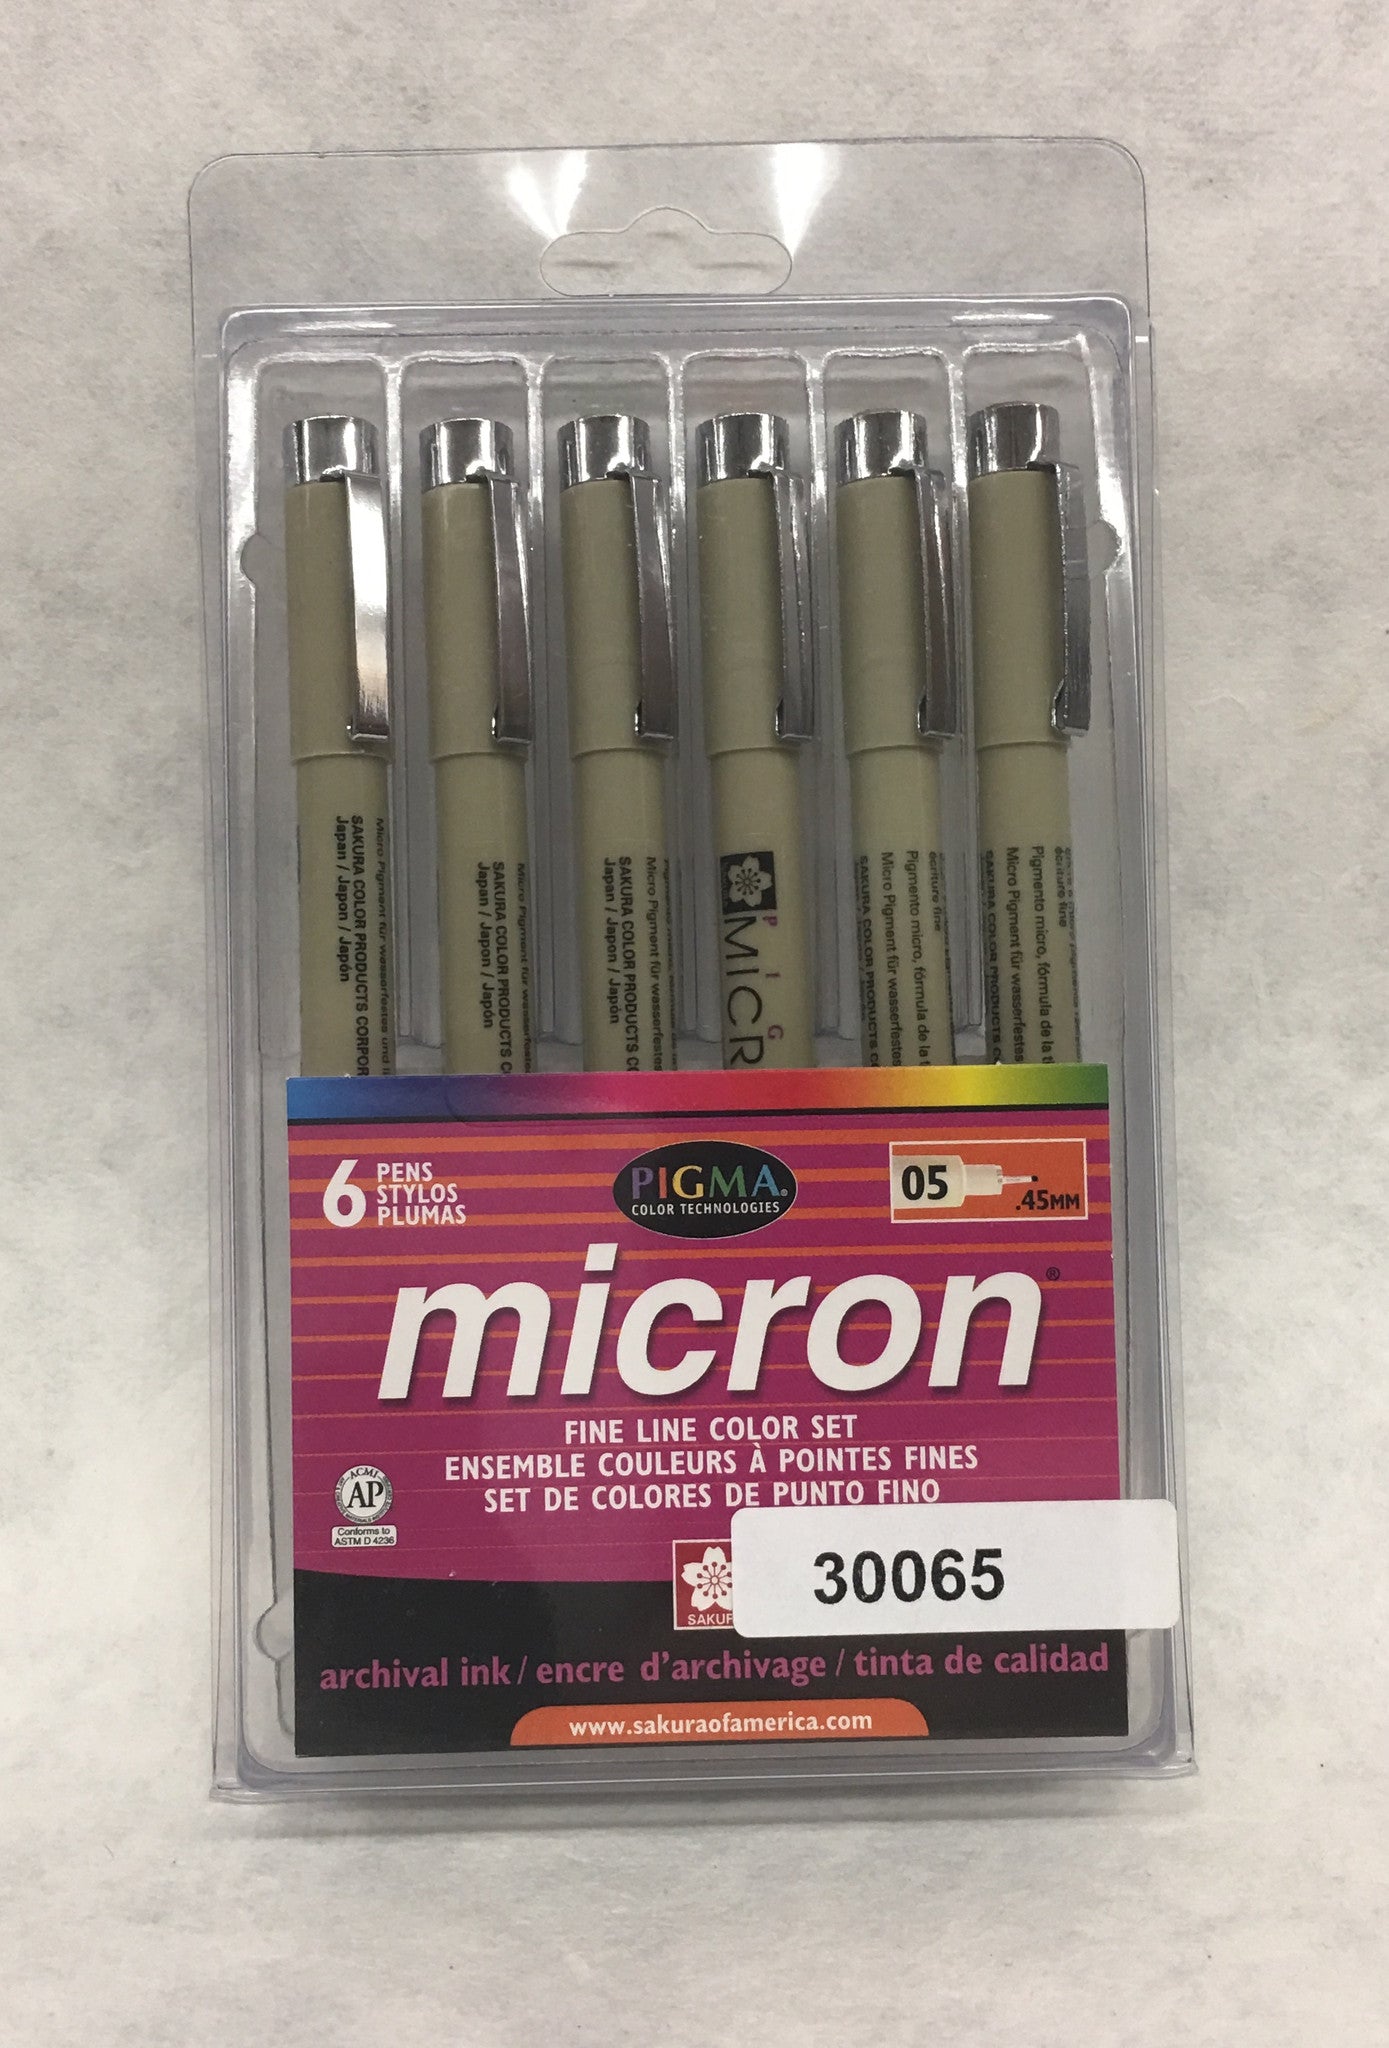 Pigma Micron 05 Assortment 6 Pack